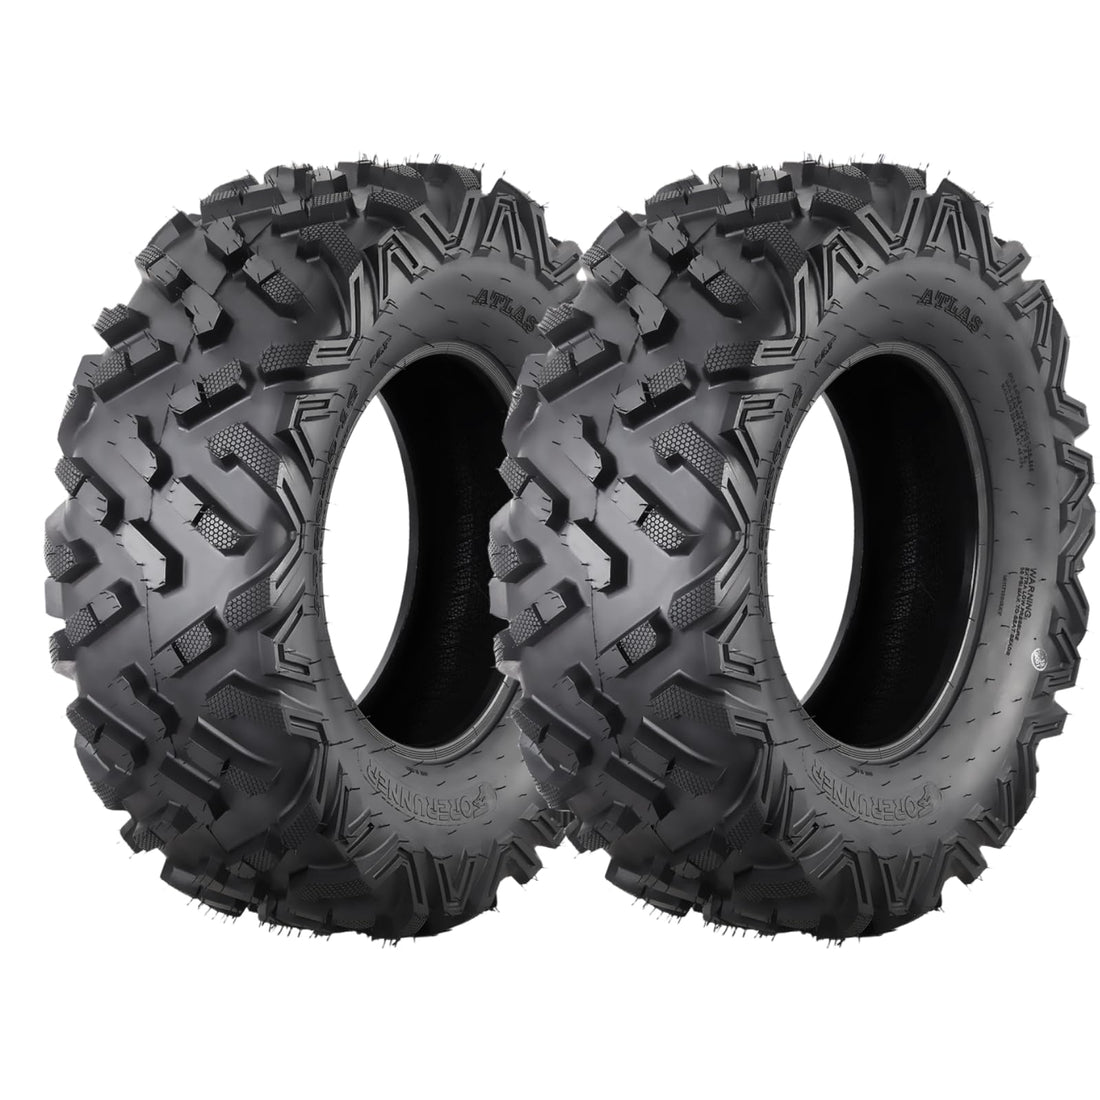 26x8-14 ATV Tires UTV Trail Sand Off-Road Tires 26x8-14, All Terrain Tires 20mm Tread Depth 26x8x14 UTV Tires, 6 PR, Tubeless Set of 2